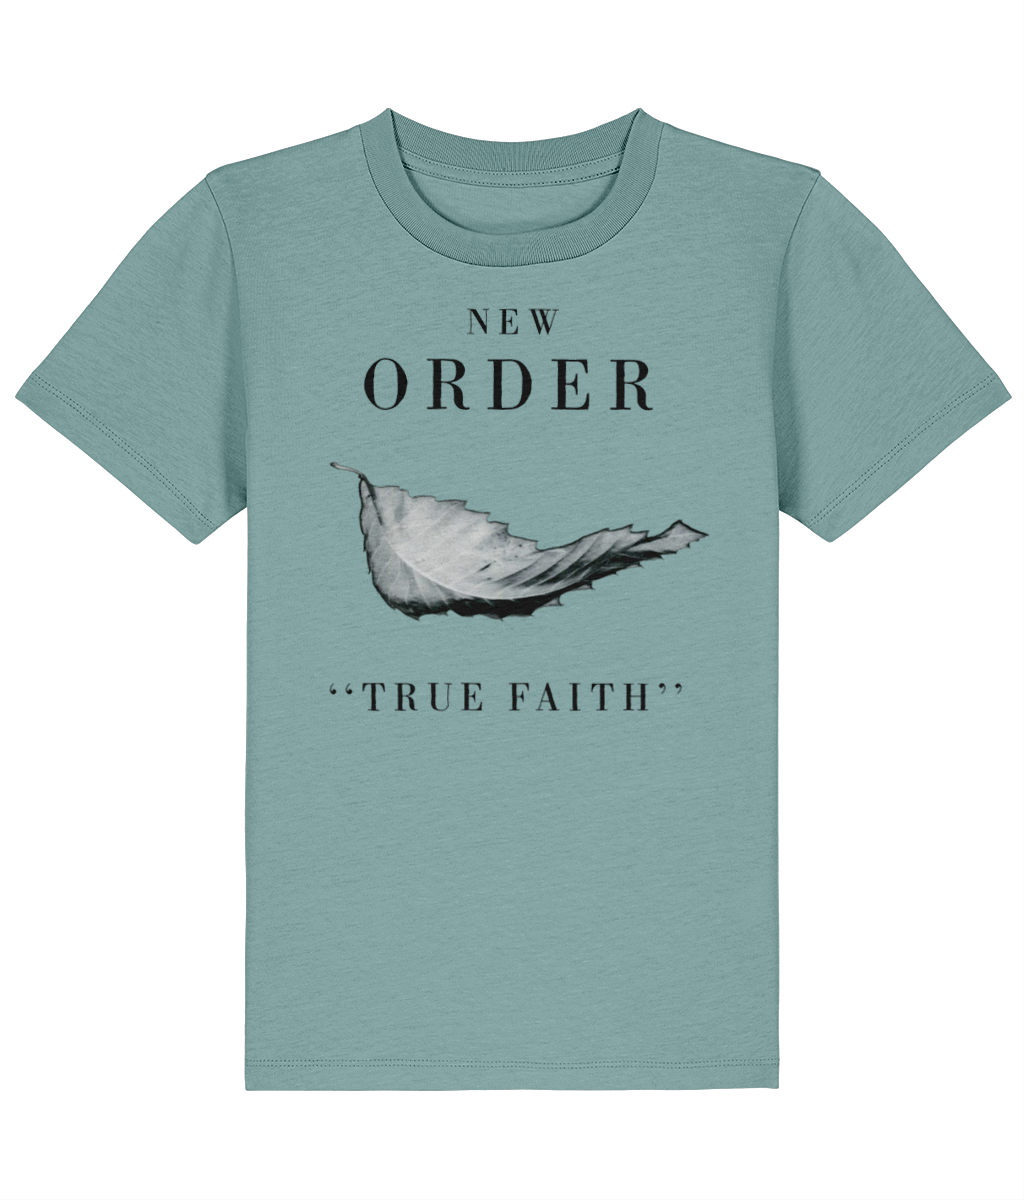 New Order - True Faith - 1987 - Monochrome - Kids